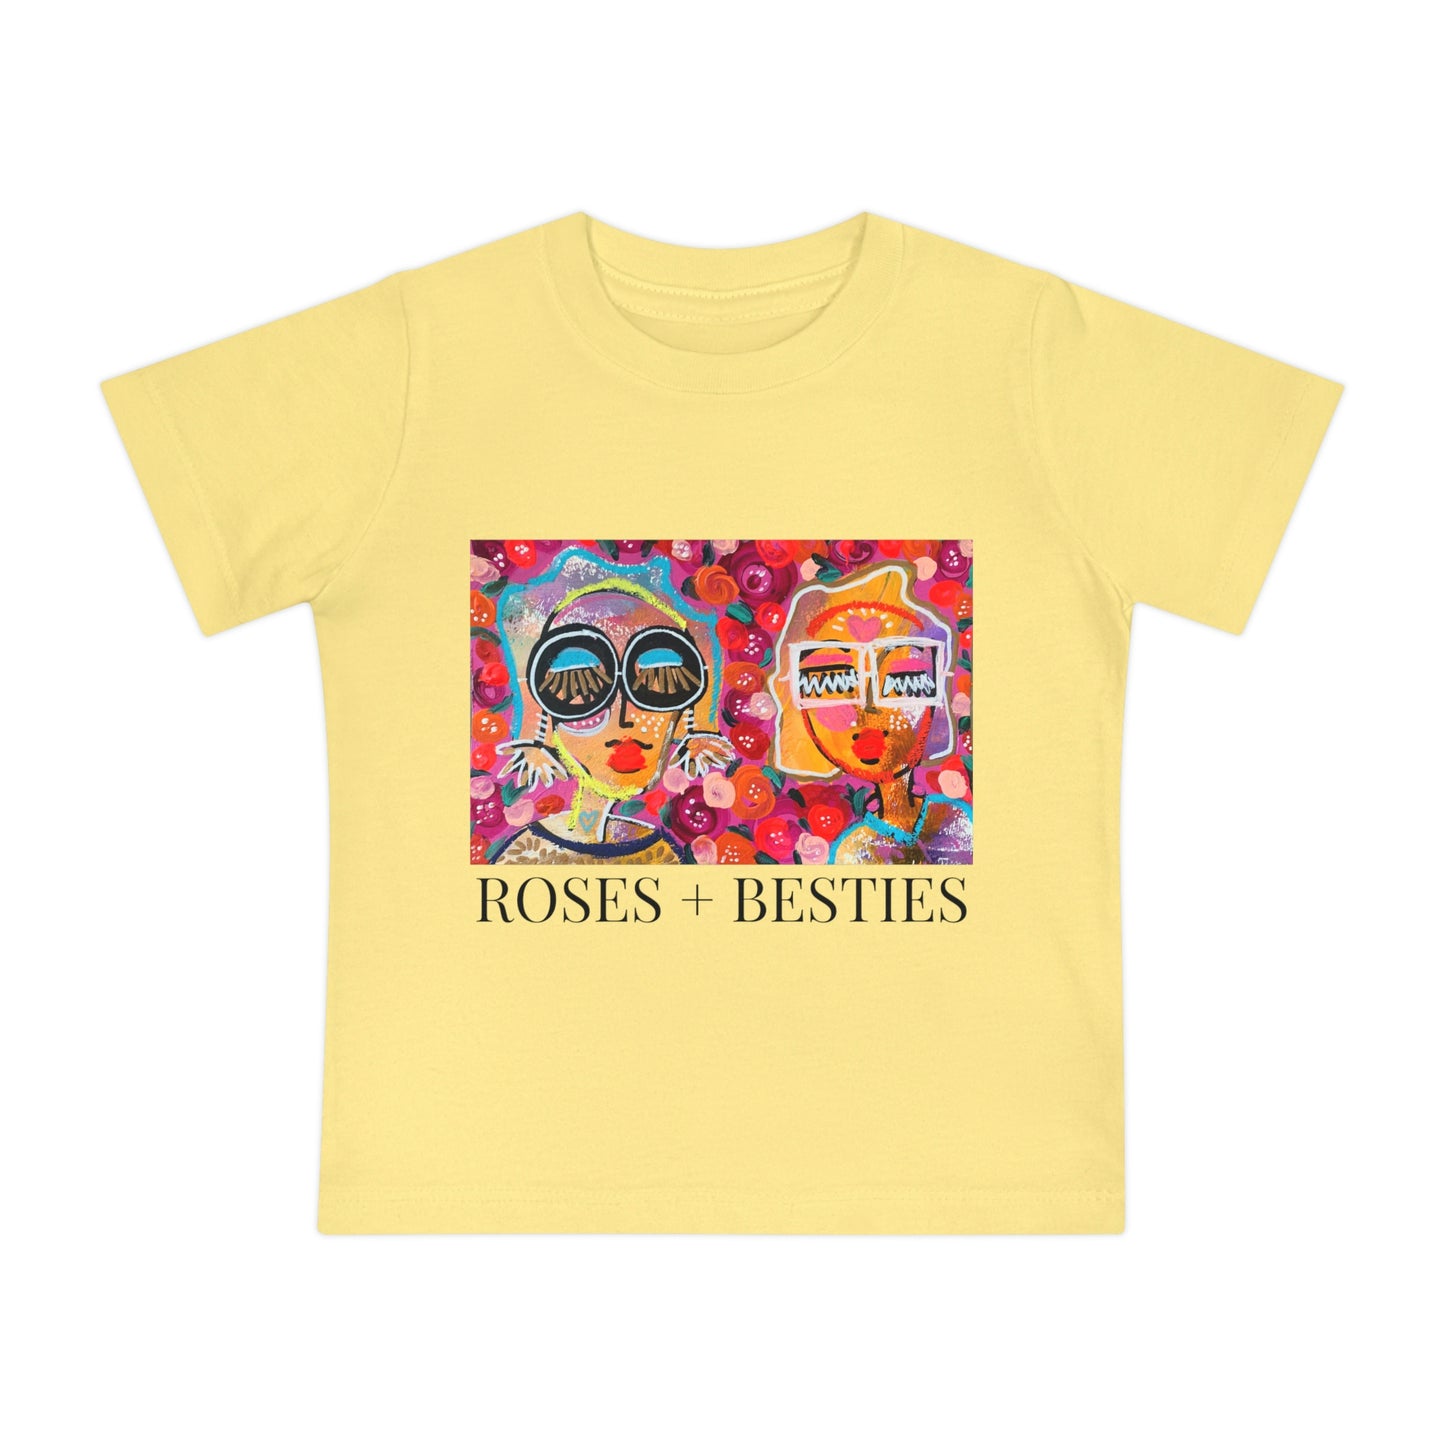 "ROSES + BESTIES" GIRL TALK ART Baby Short Sleeve T-Shirt